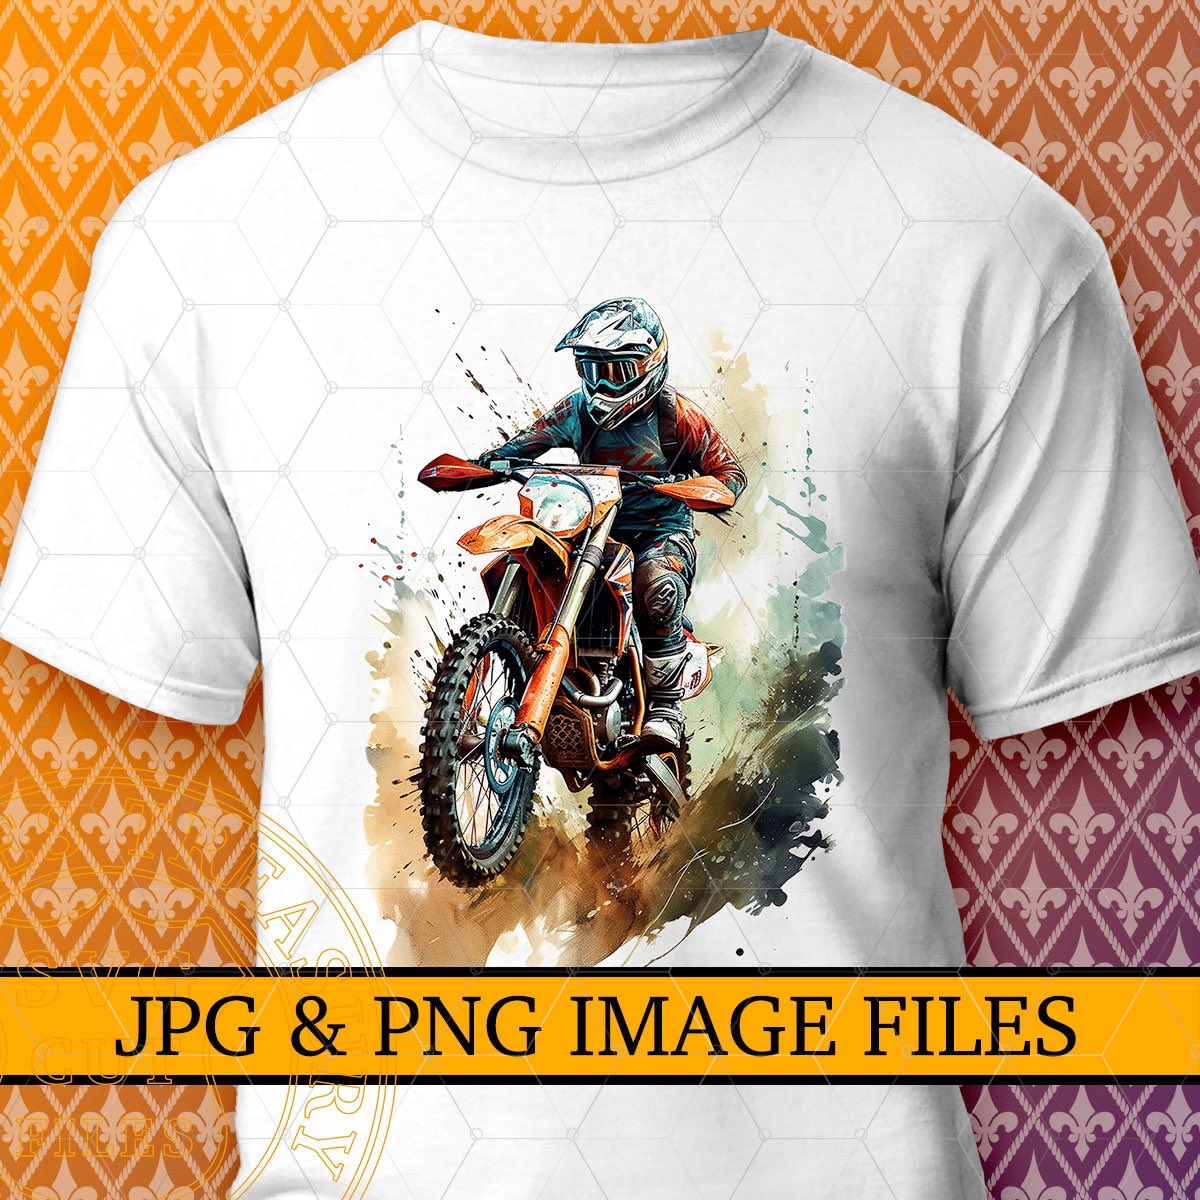 Dirt Bike T-Shirt Design Printable Images. etsy.me/43gZfHG
•
#dirtbike #motocross #mx #supercross #enduro #ktm #braap #dirtbikes #moto #motolife #sx #fmx #suzuki #yamaha #braaap #twostroke #mxlife #thisismoto #husqvarna #tshirtdesign